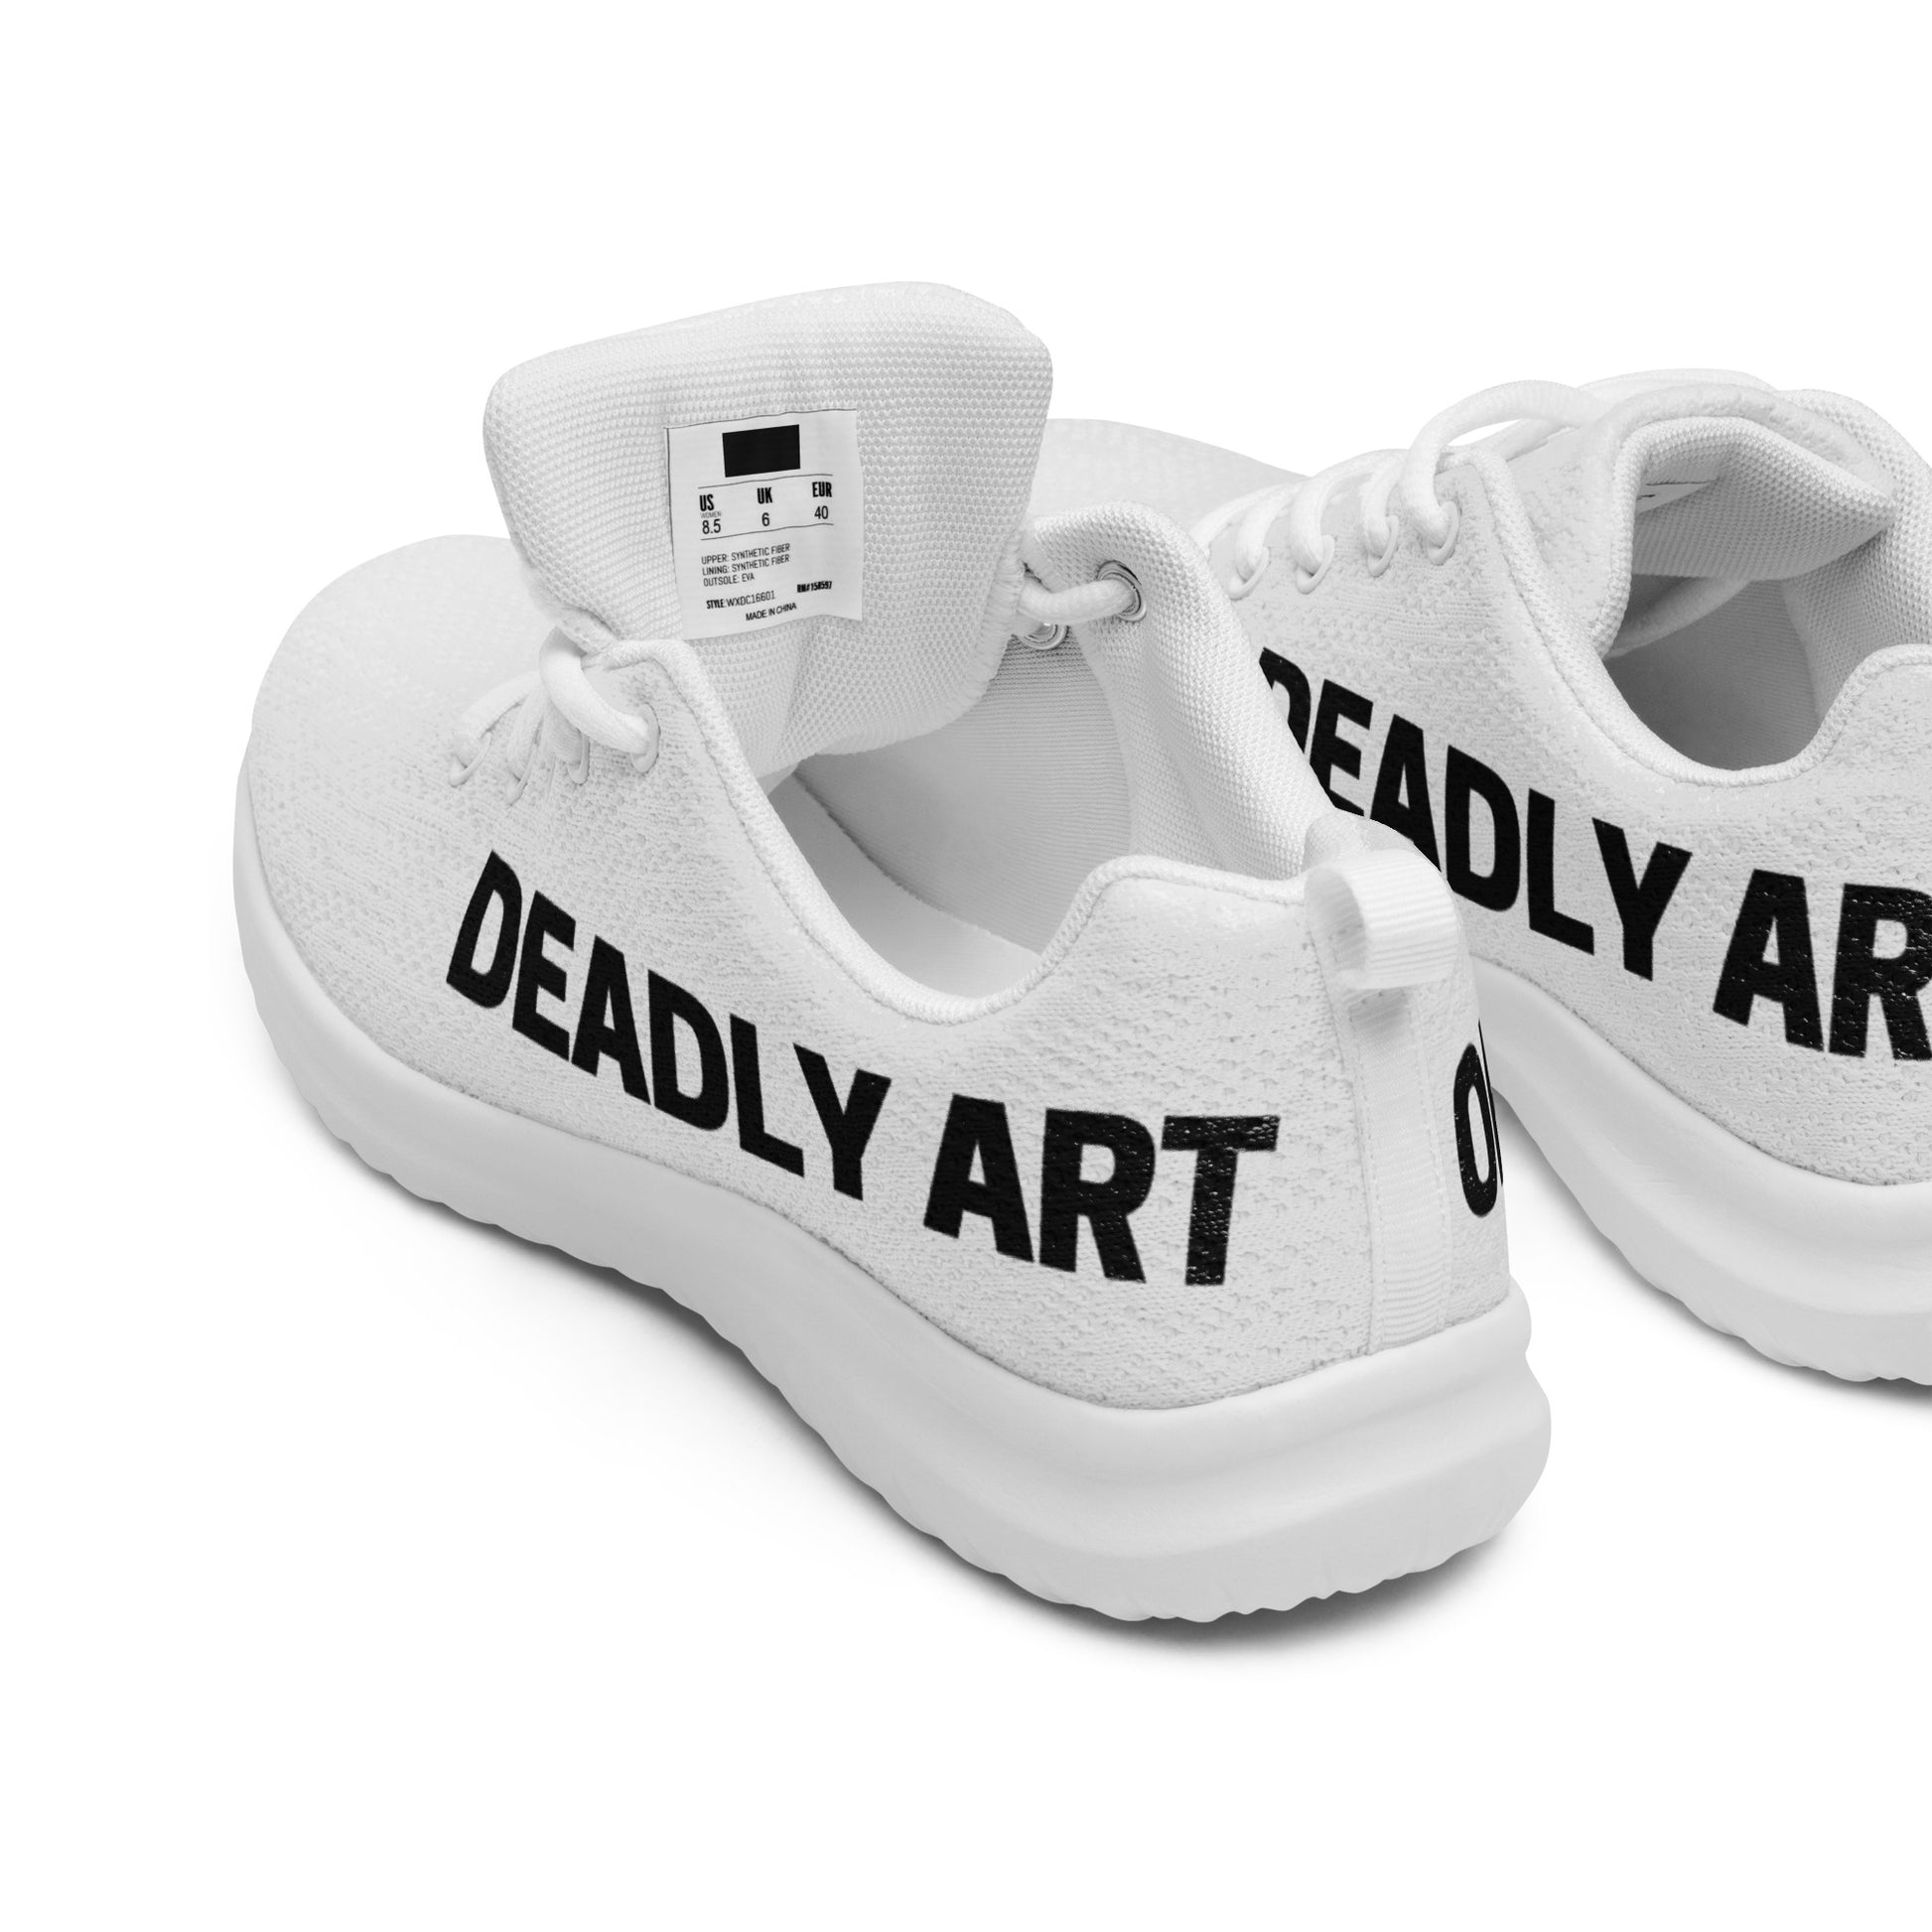 DAOS 2 Sneakers (White) deadlyartofsurvival.com